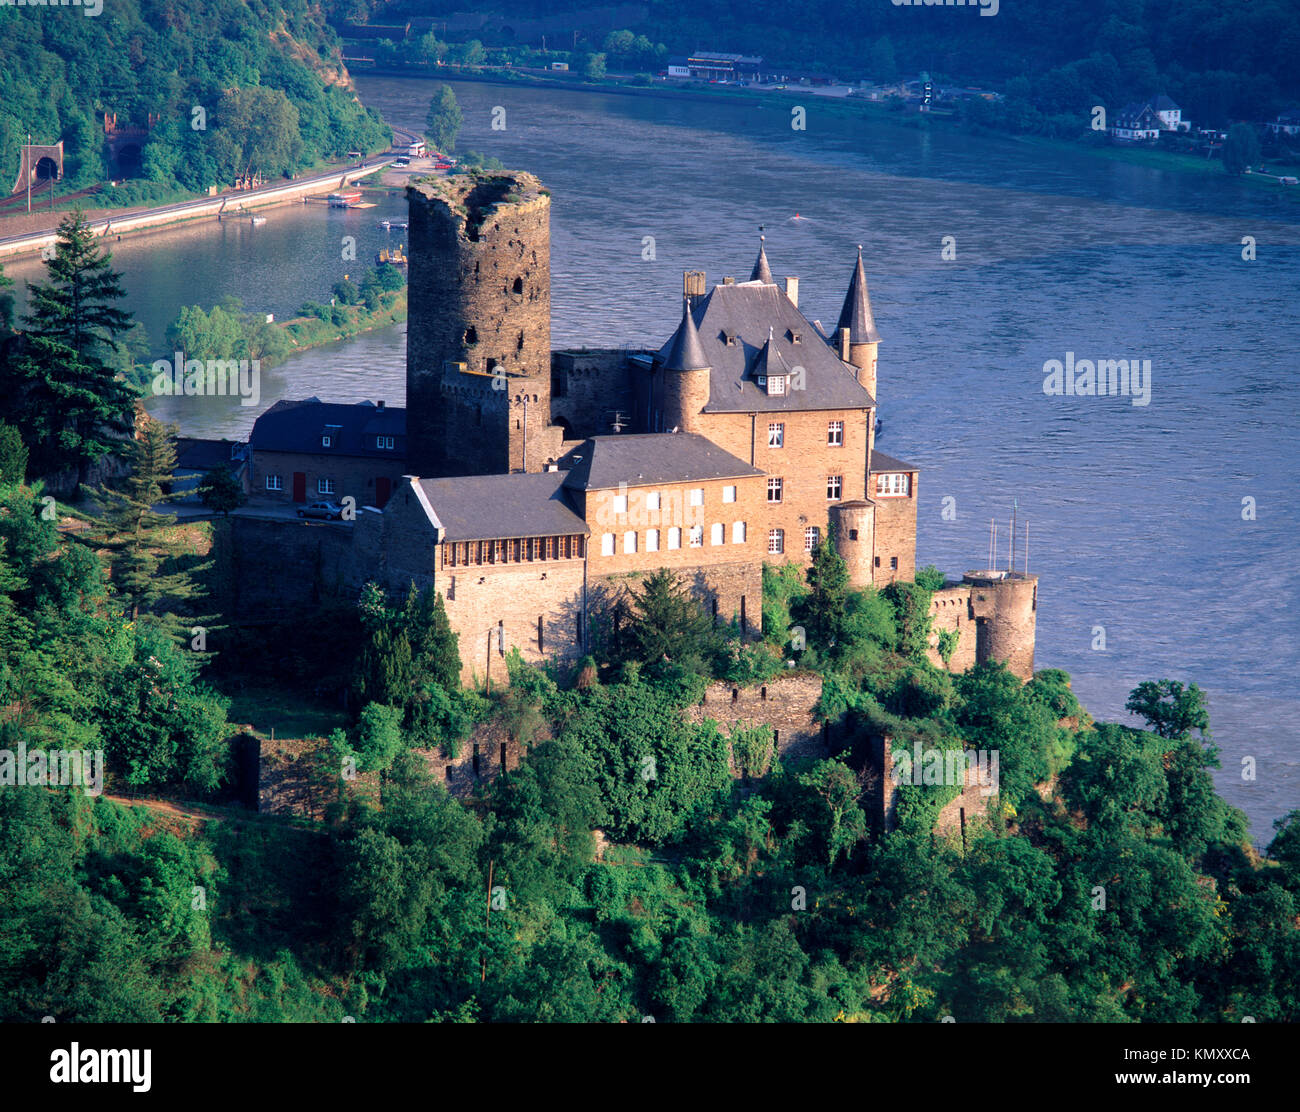 Burg Katz and River Rhine at St. Goarshausen, Rhineland - Palatinate,  Germany Stock Photo - Alamy